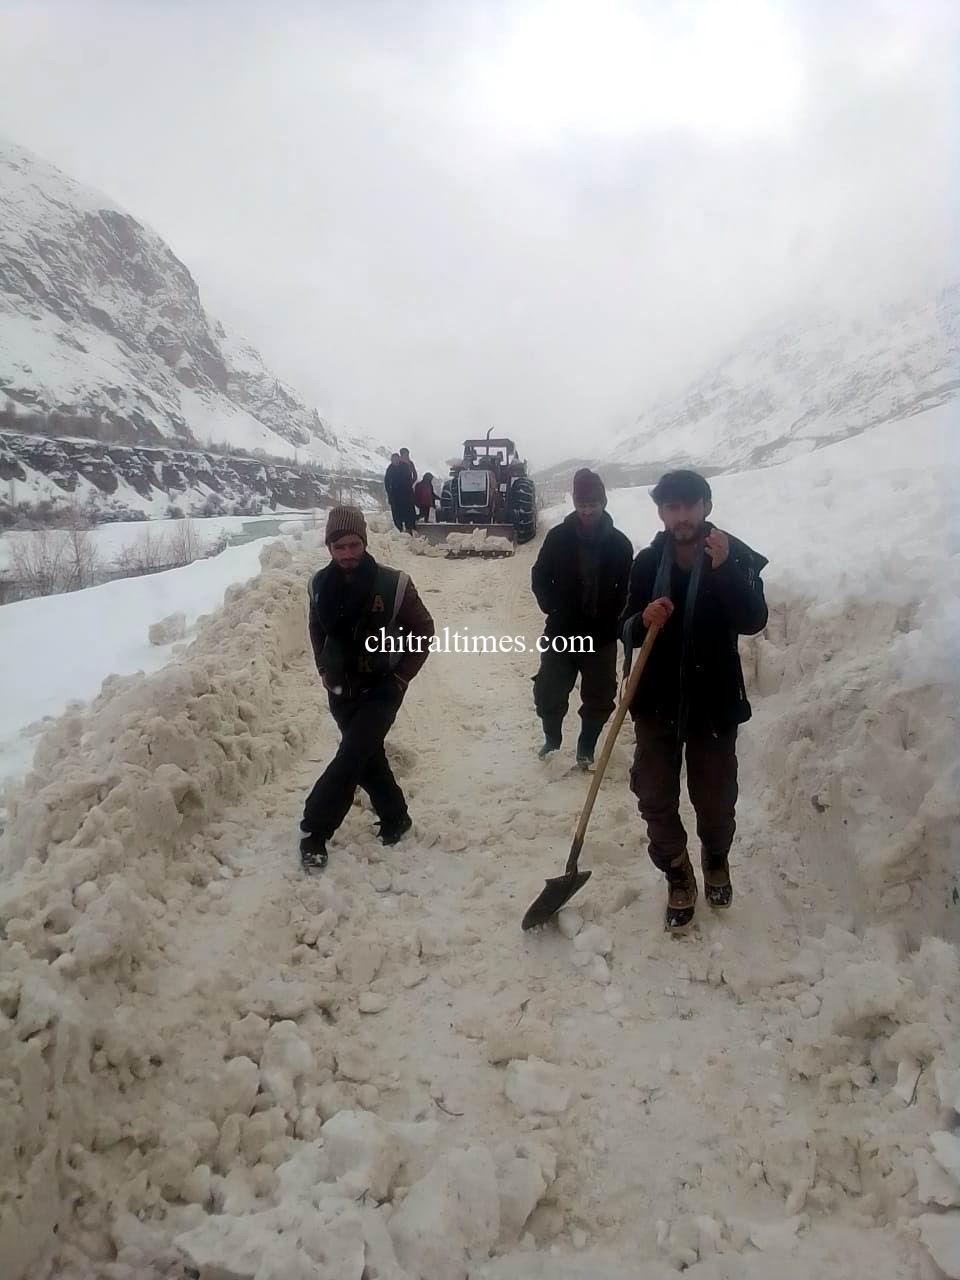 chitraltimes yarkhoon road snow clearing in progress